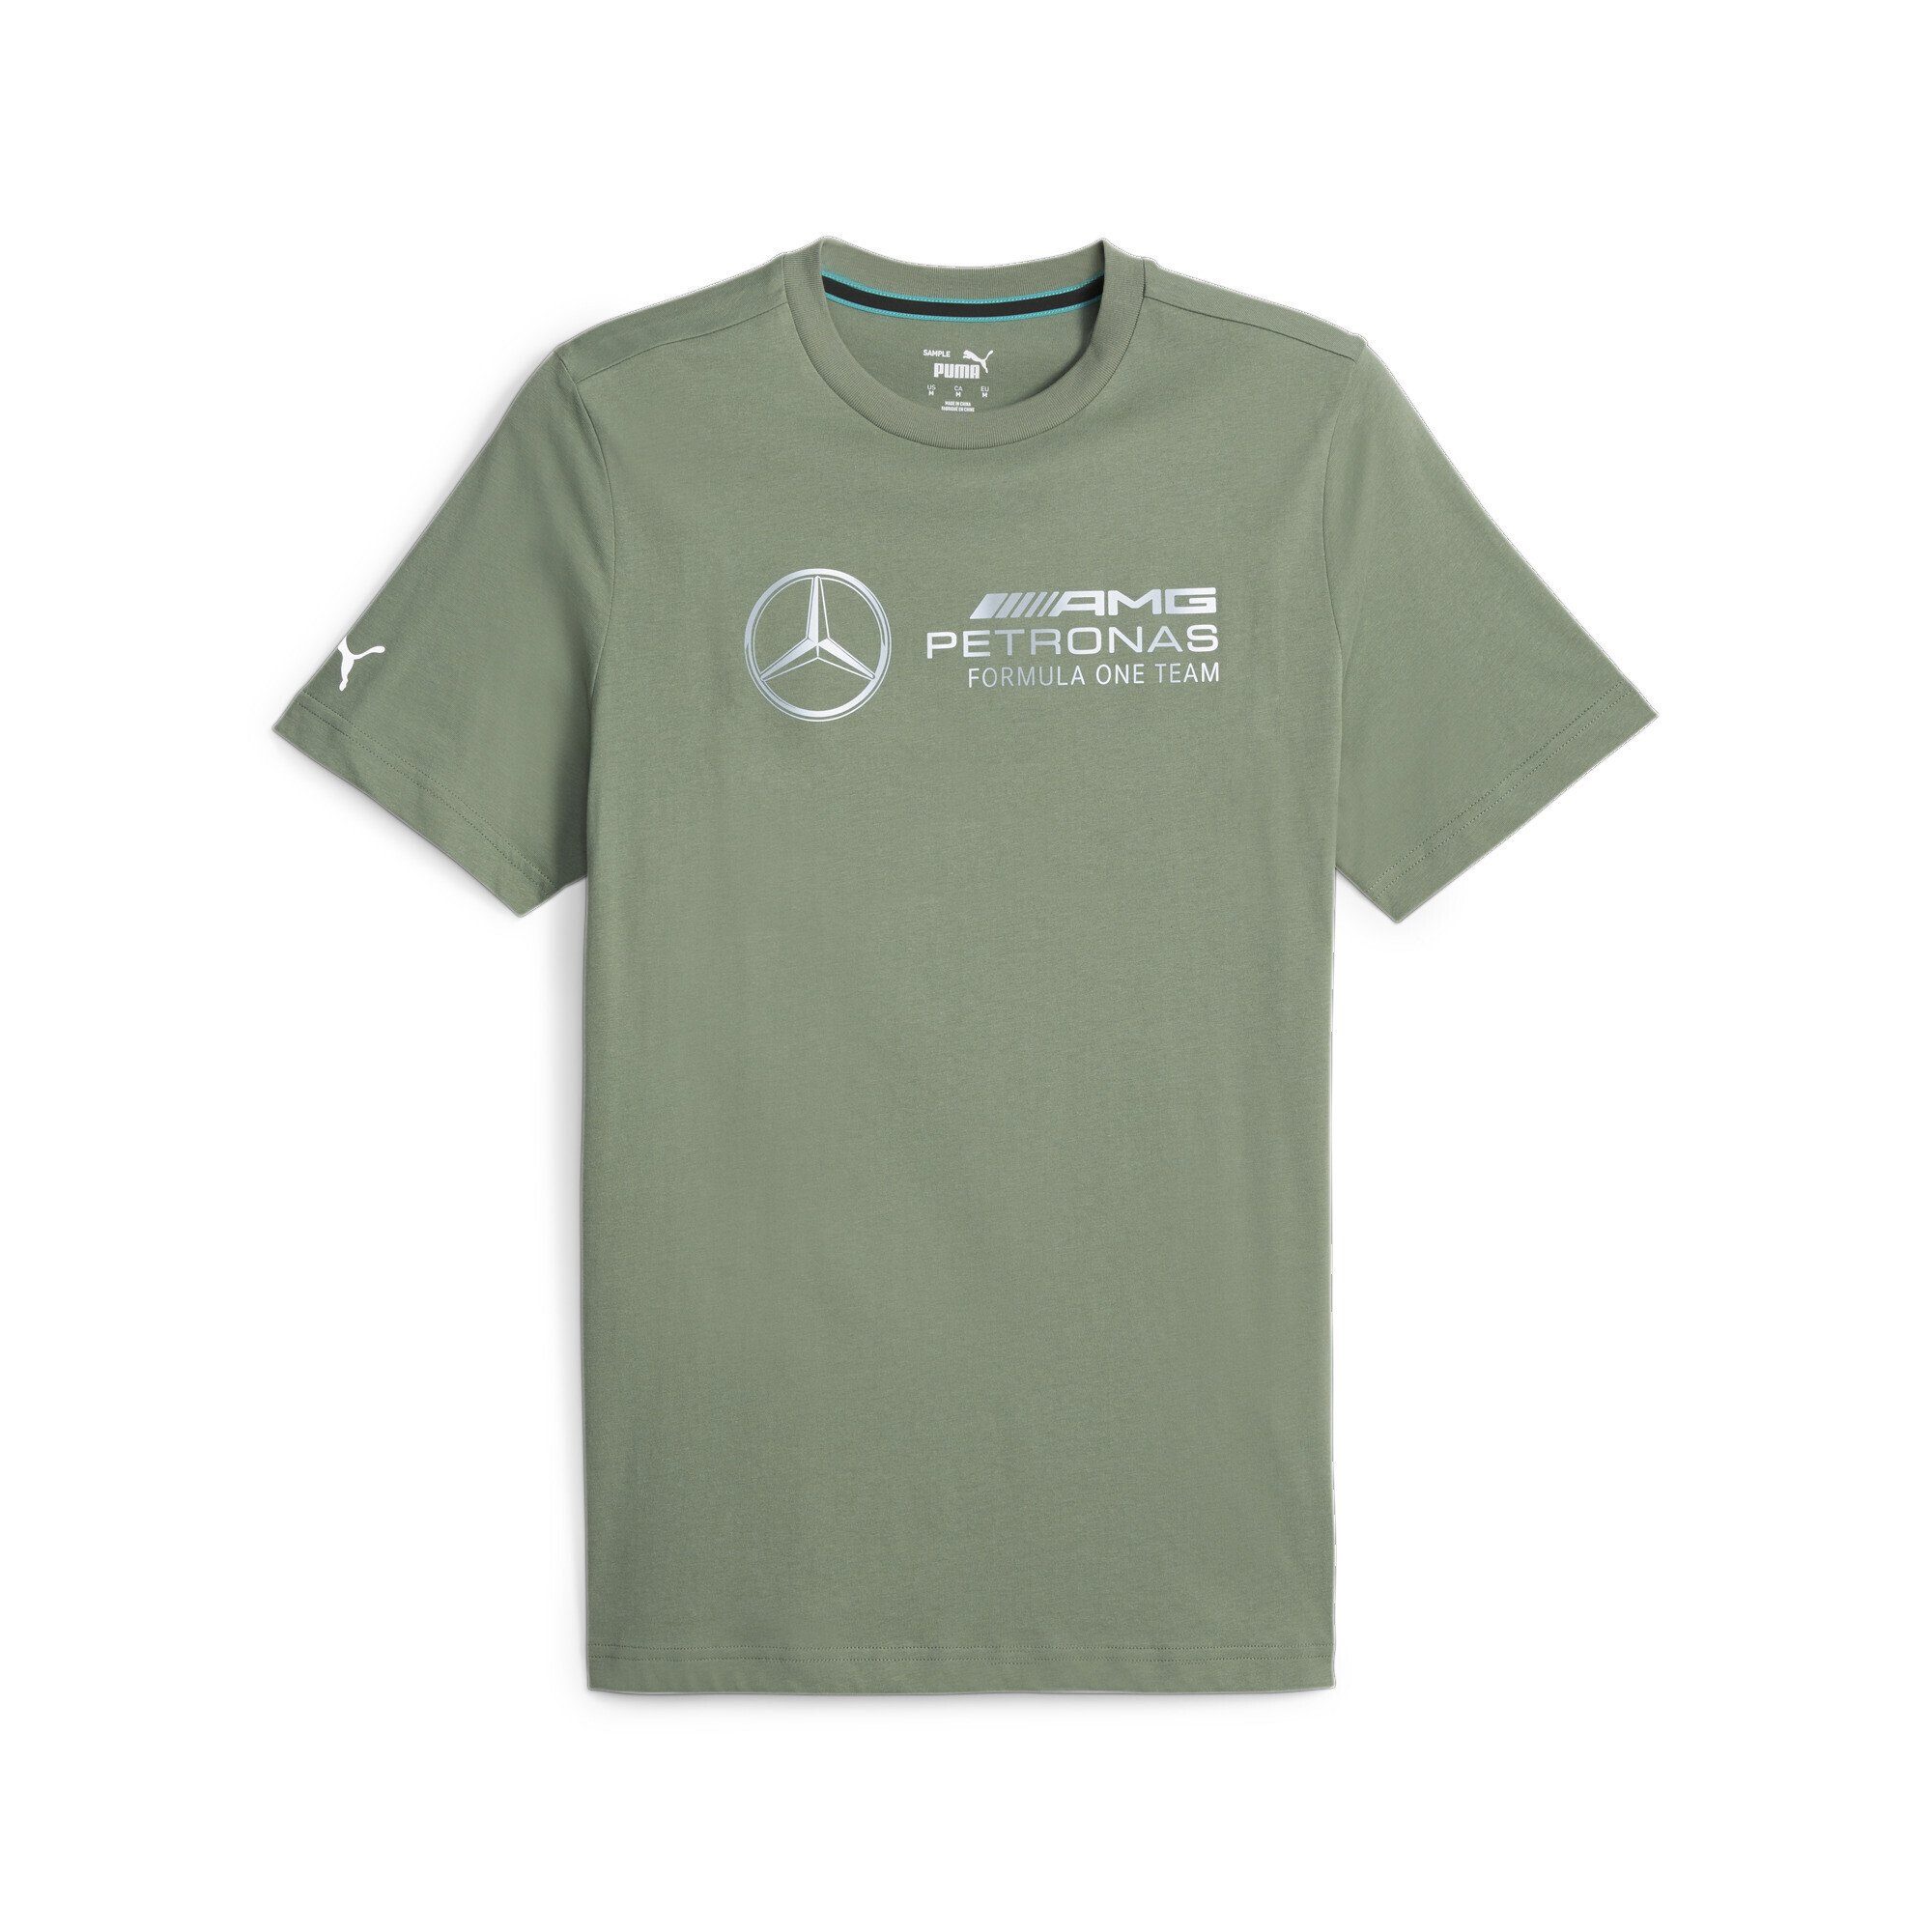 PETRONAS T-Shirt Green Eucalyptus PUMA T-Shirt Motorsport Mercedes-AMG Herren